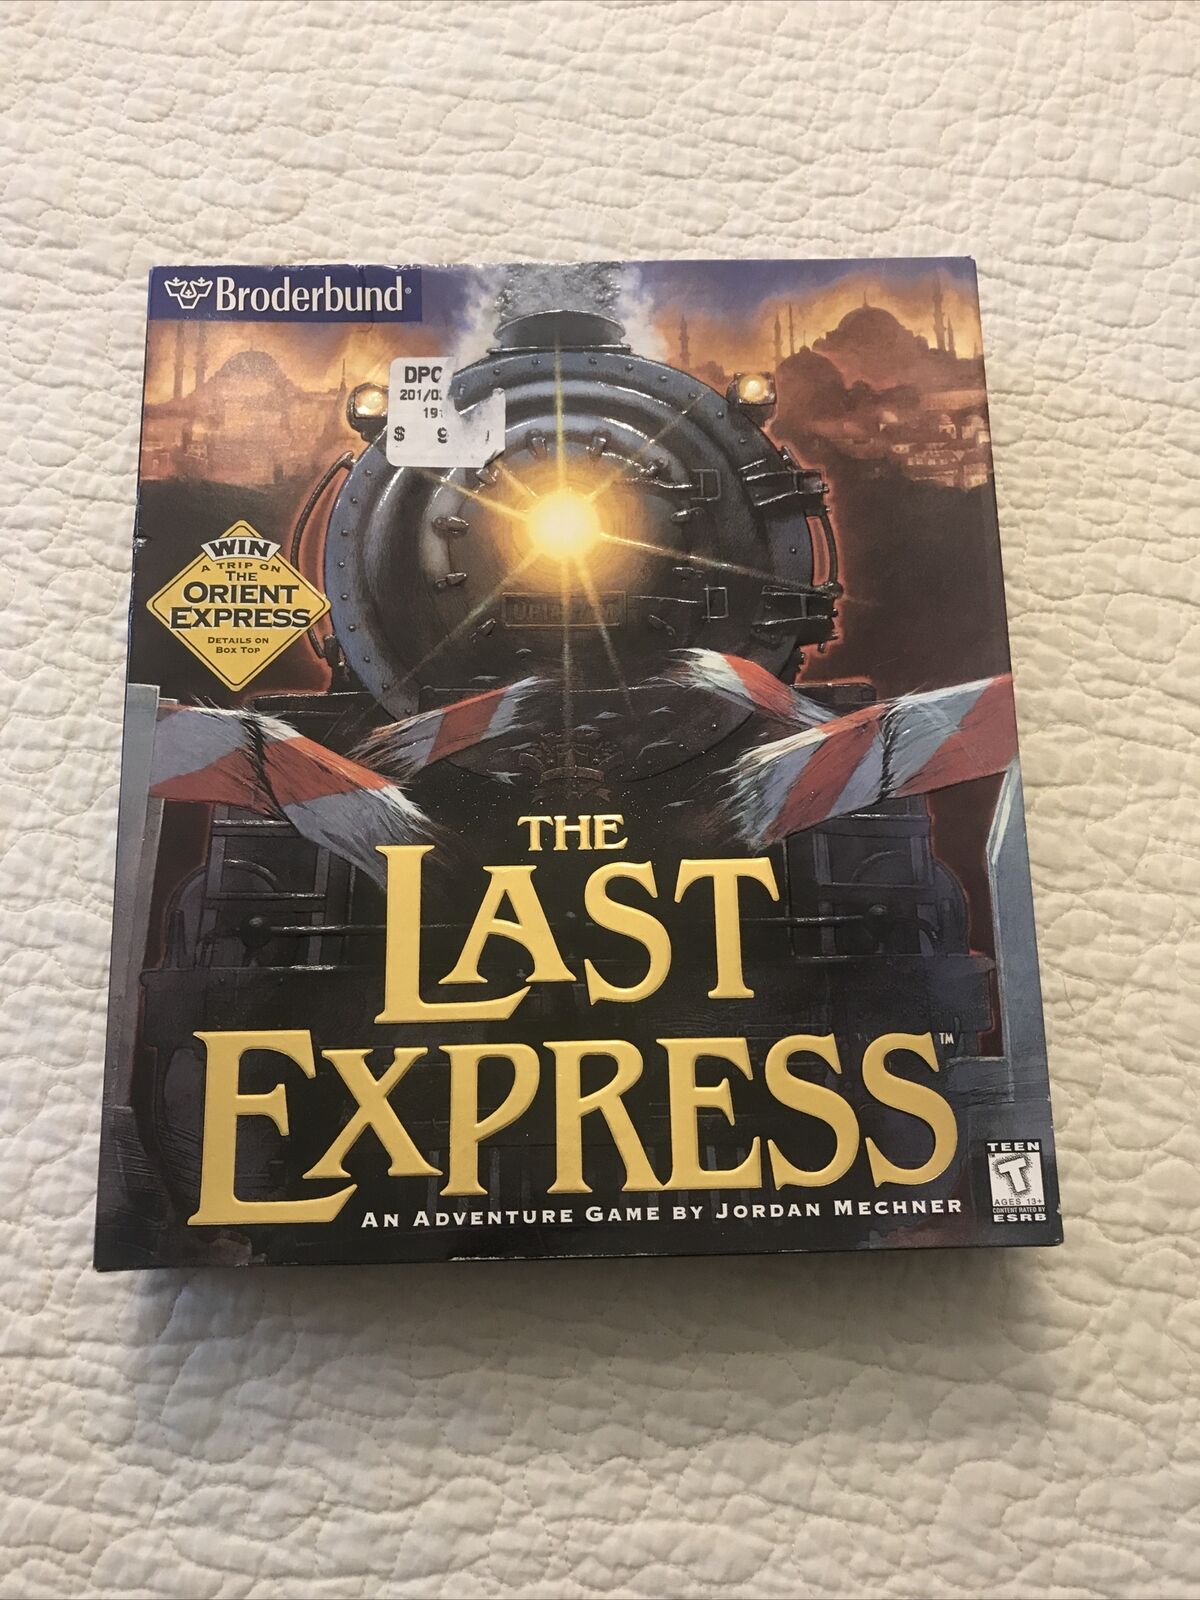 1997 THE LAST EXPRESS BIG BOX PC CD-ROM W 95 BRODERBUND FACTORY SEALED